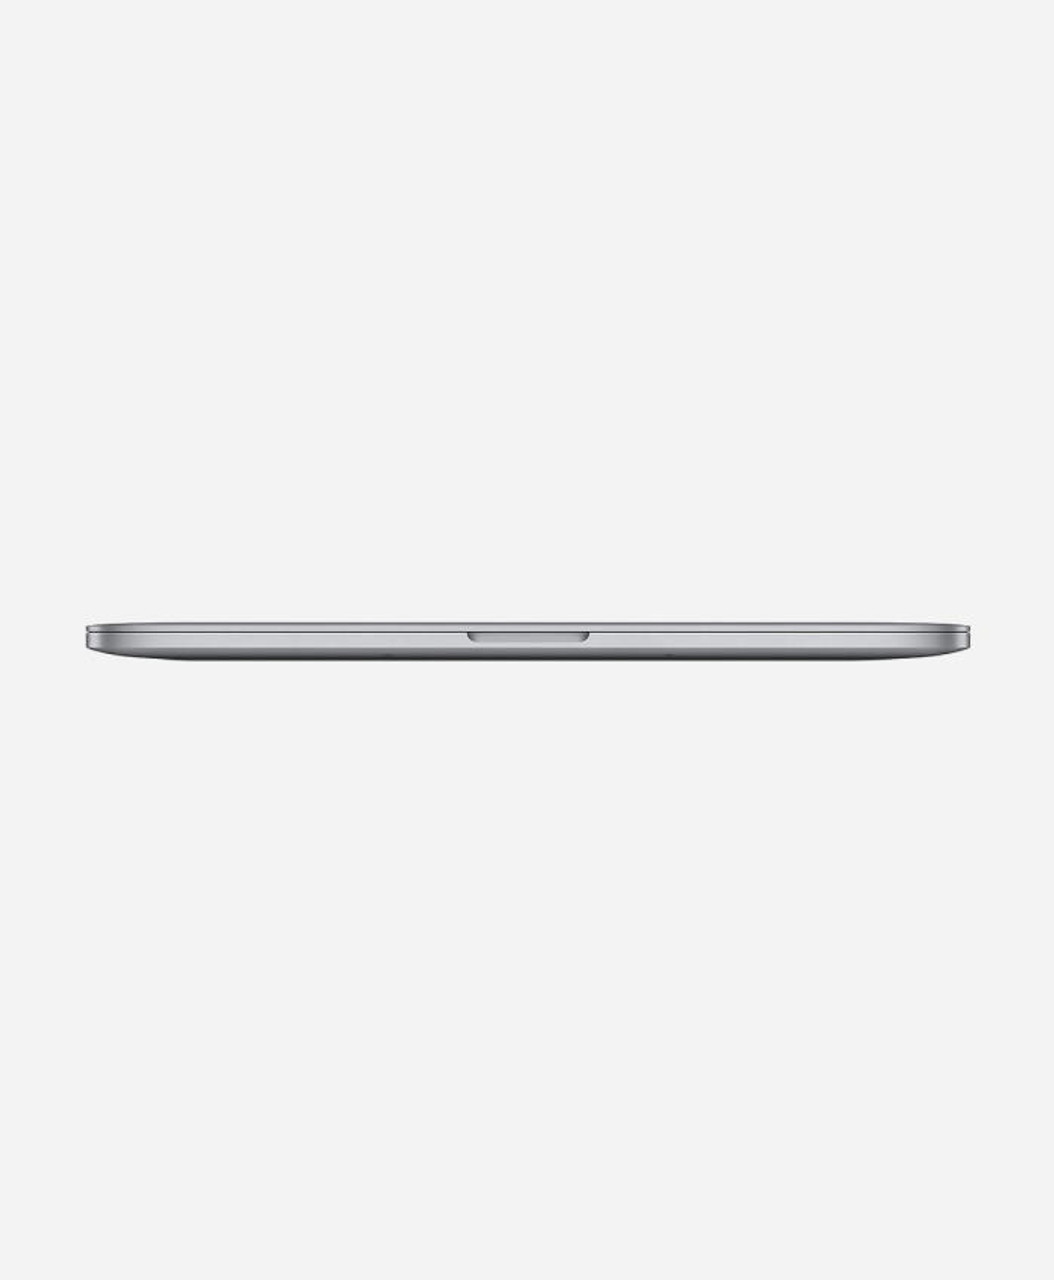 Used Apple Macbook Pro 16-inch (Retina DG